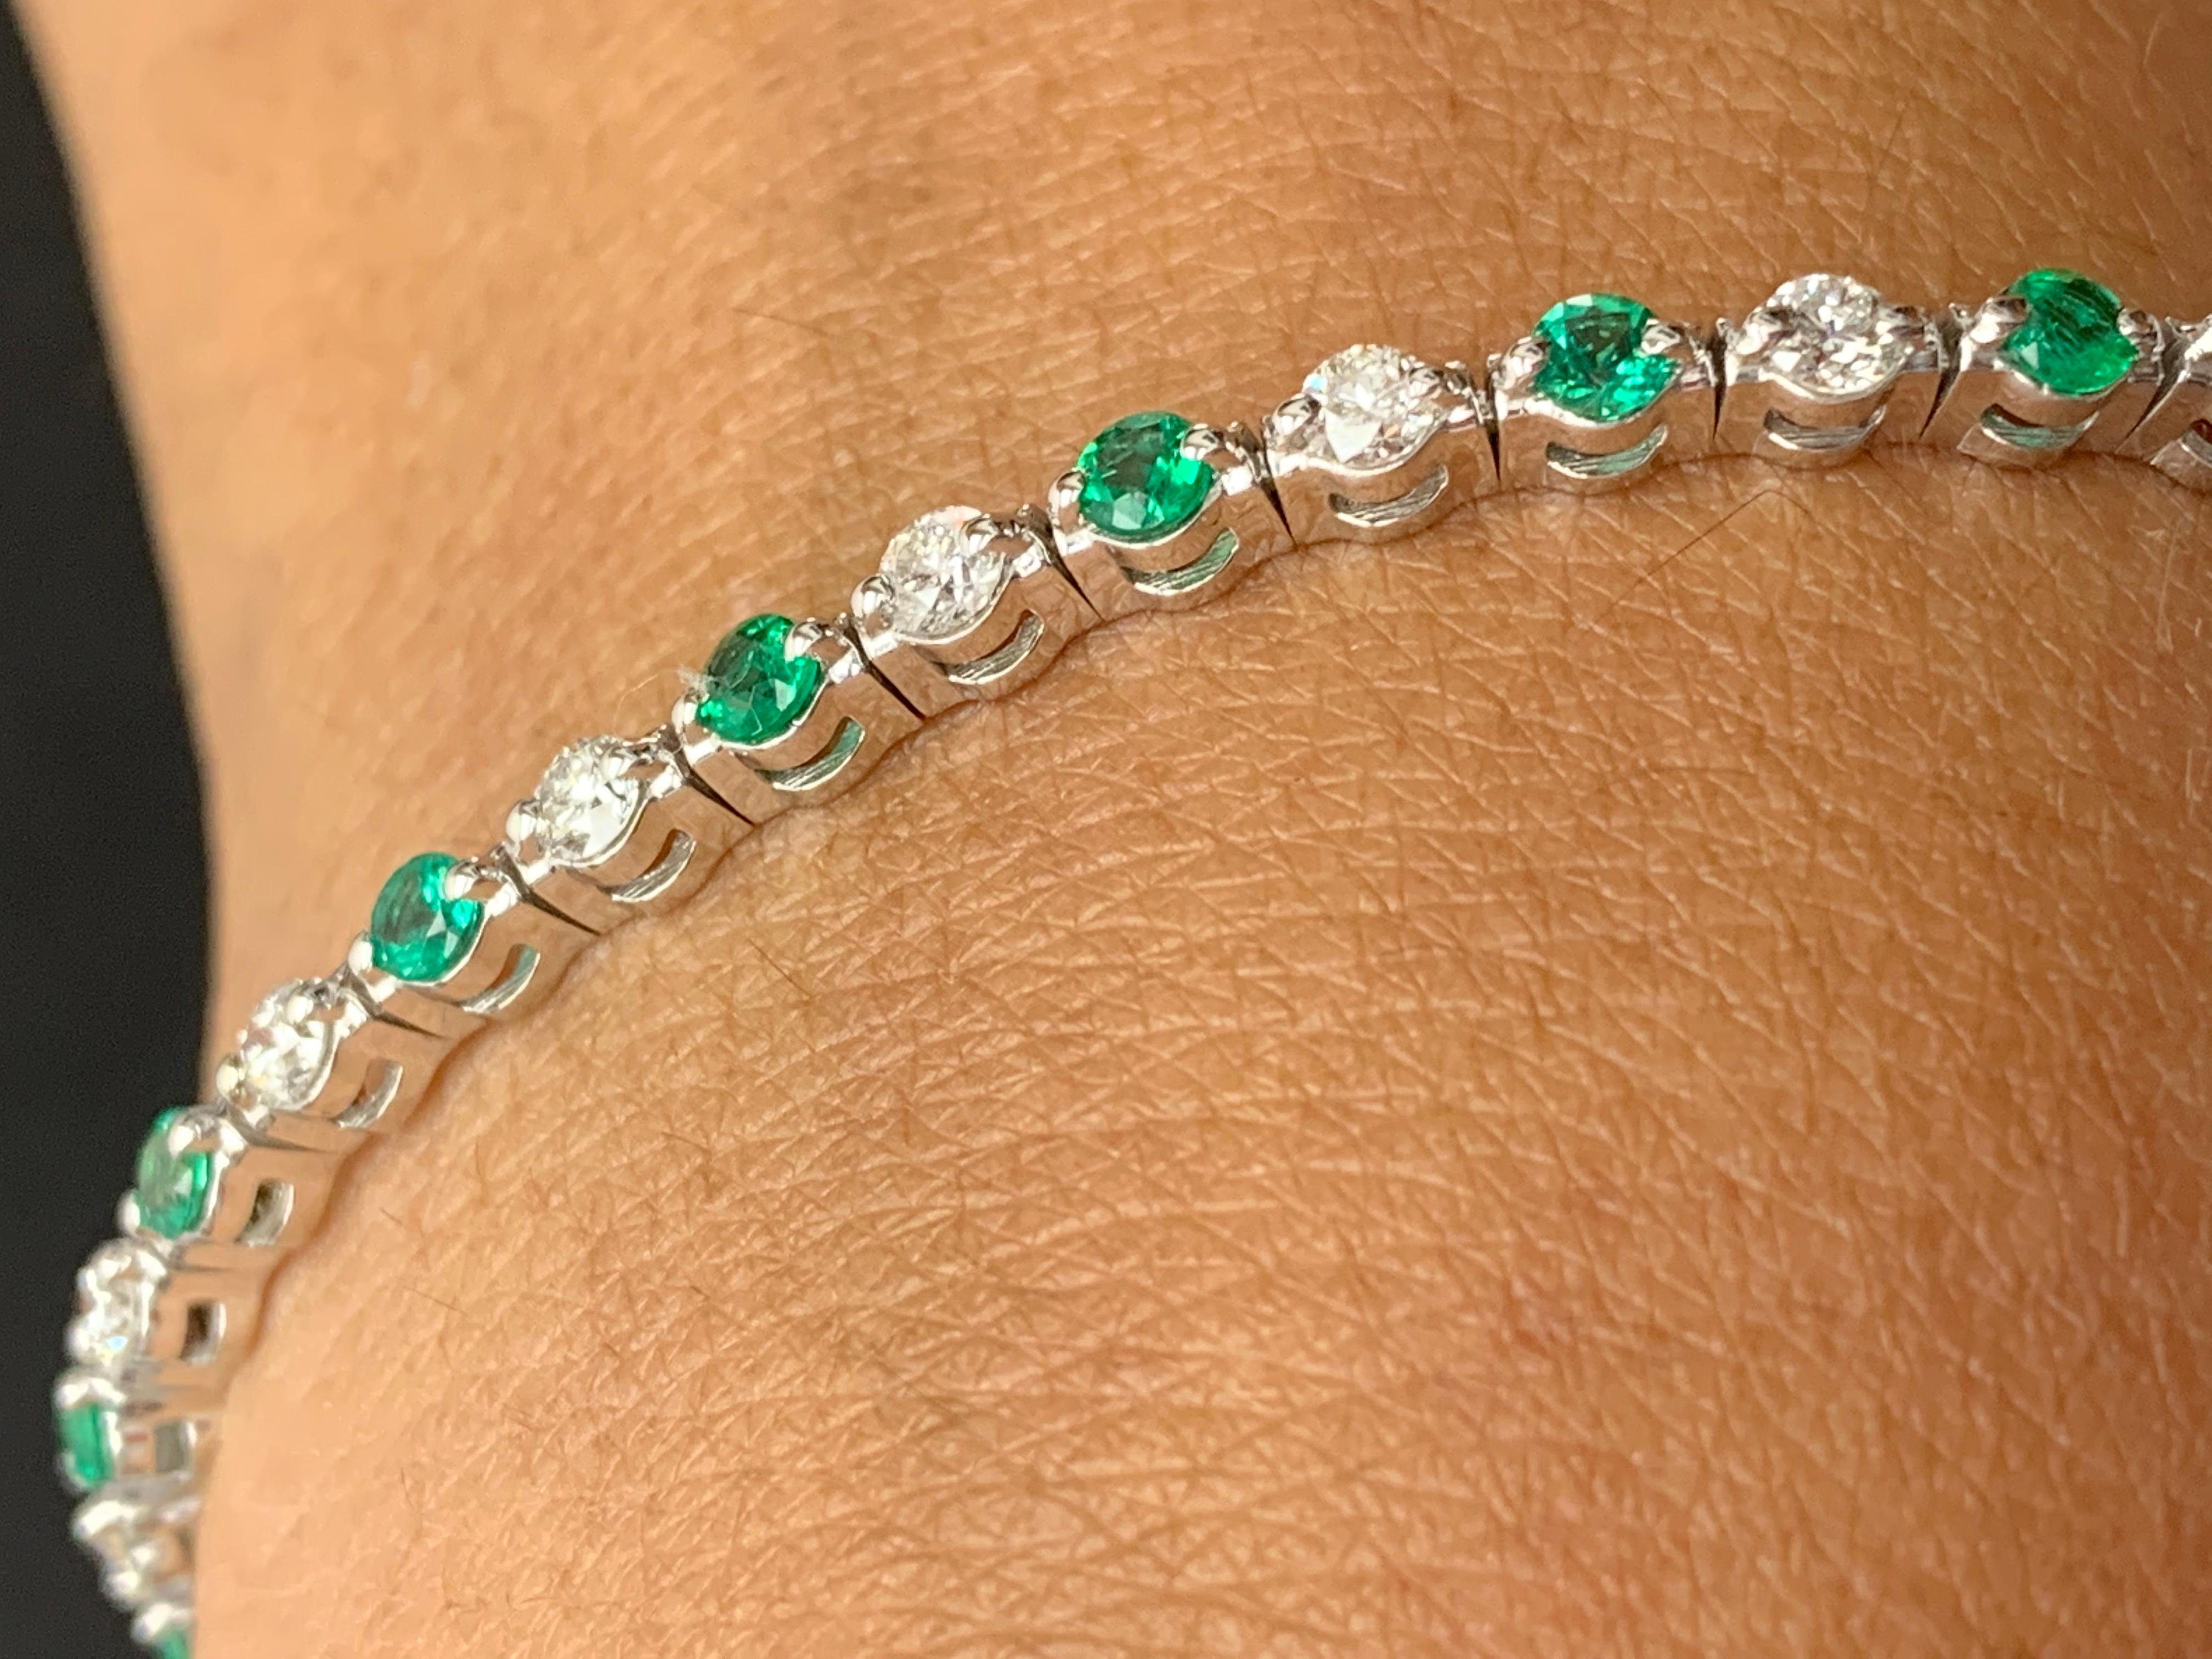 Grandeur 2.24 Carat Round Emerald and Diamond Bracelet in 14K White Gold For Sale 2